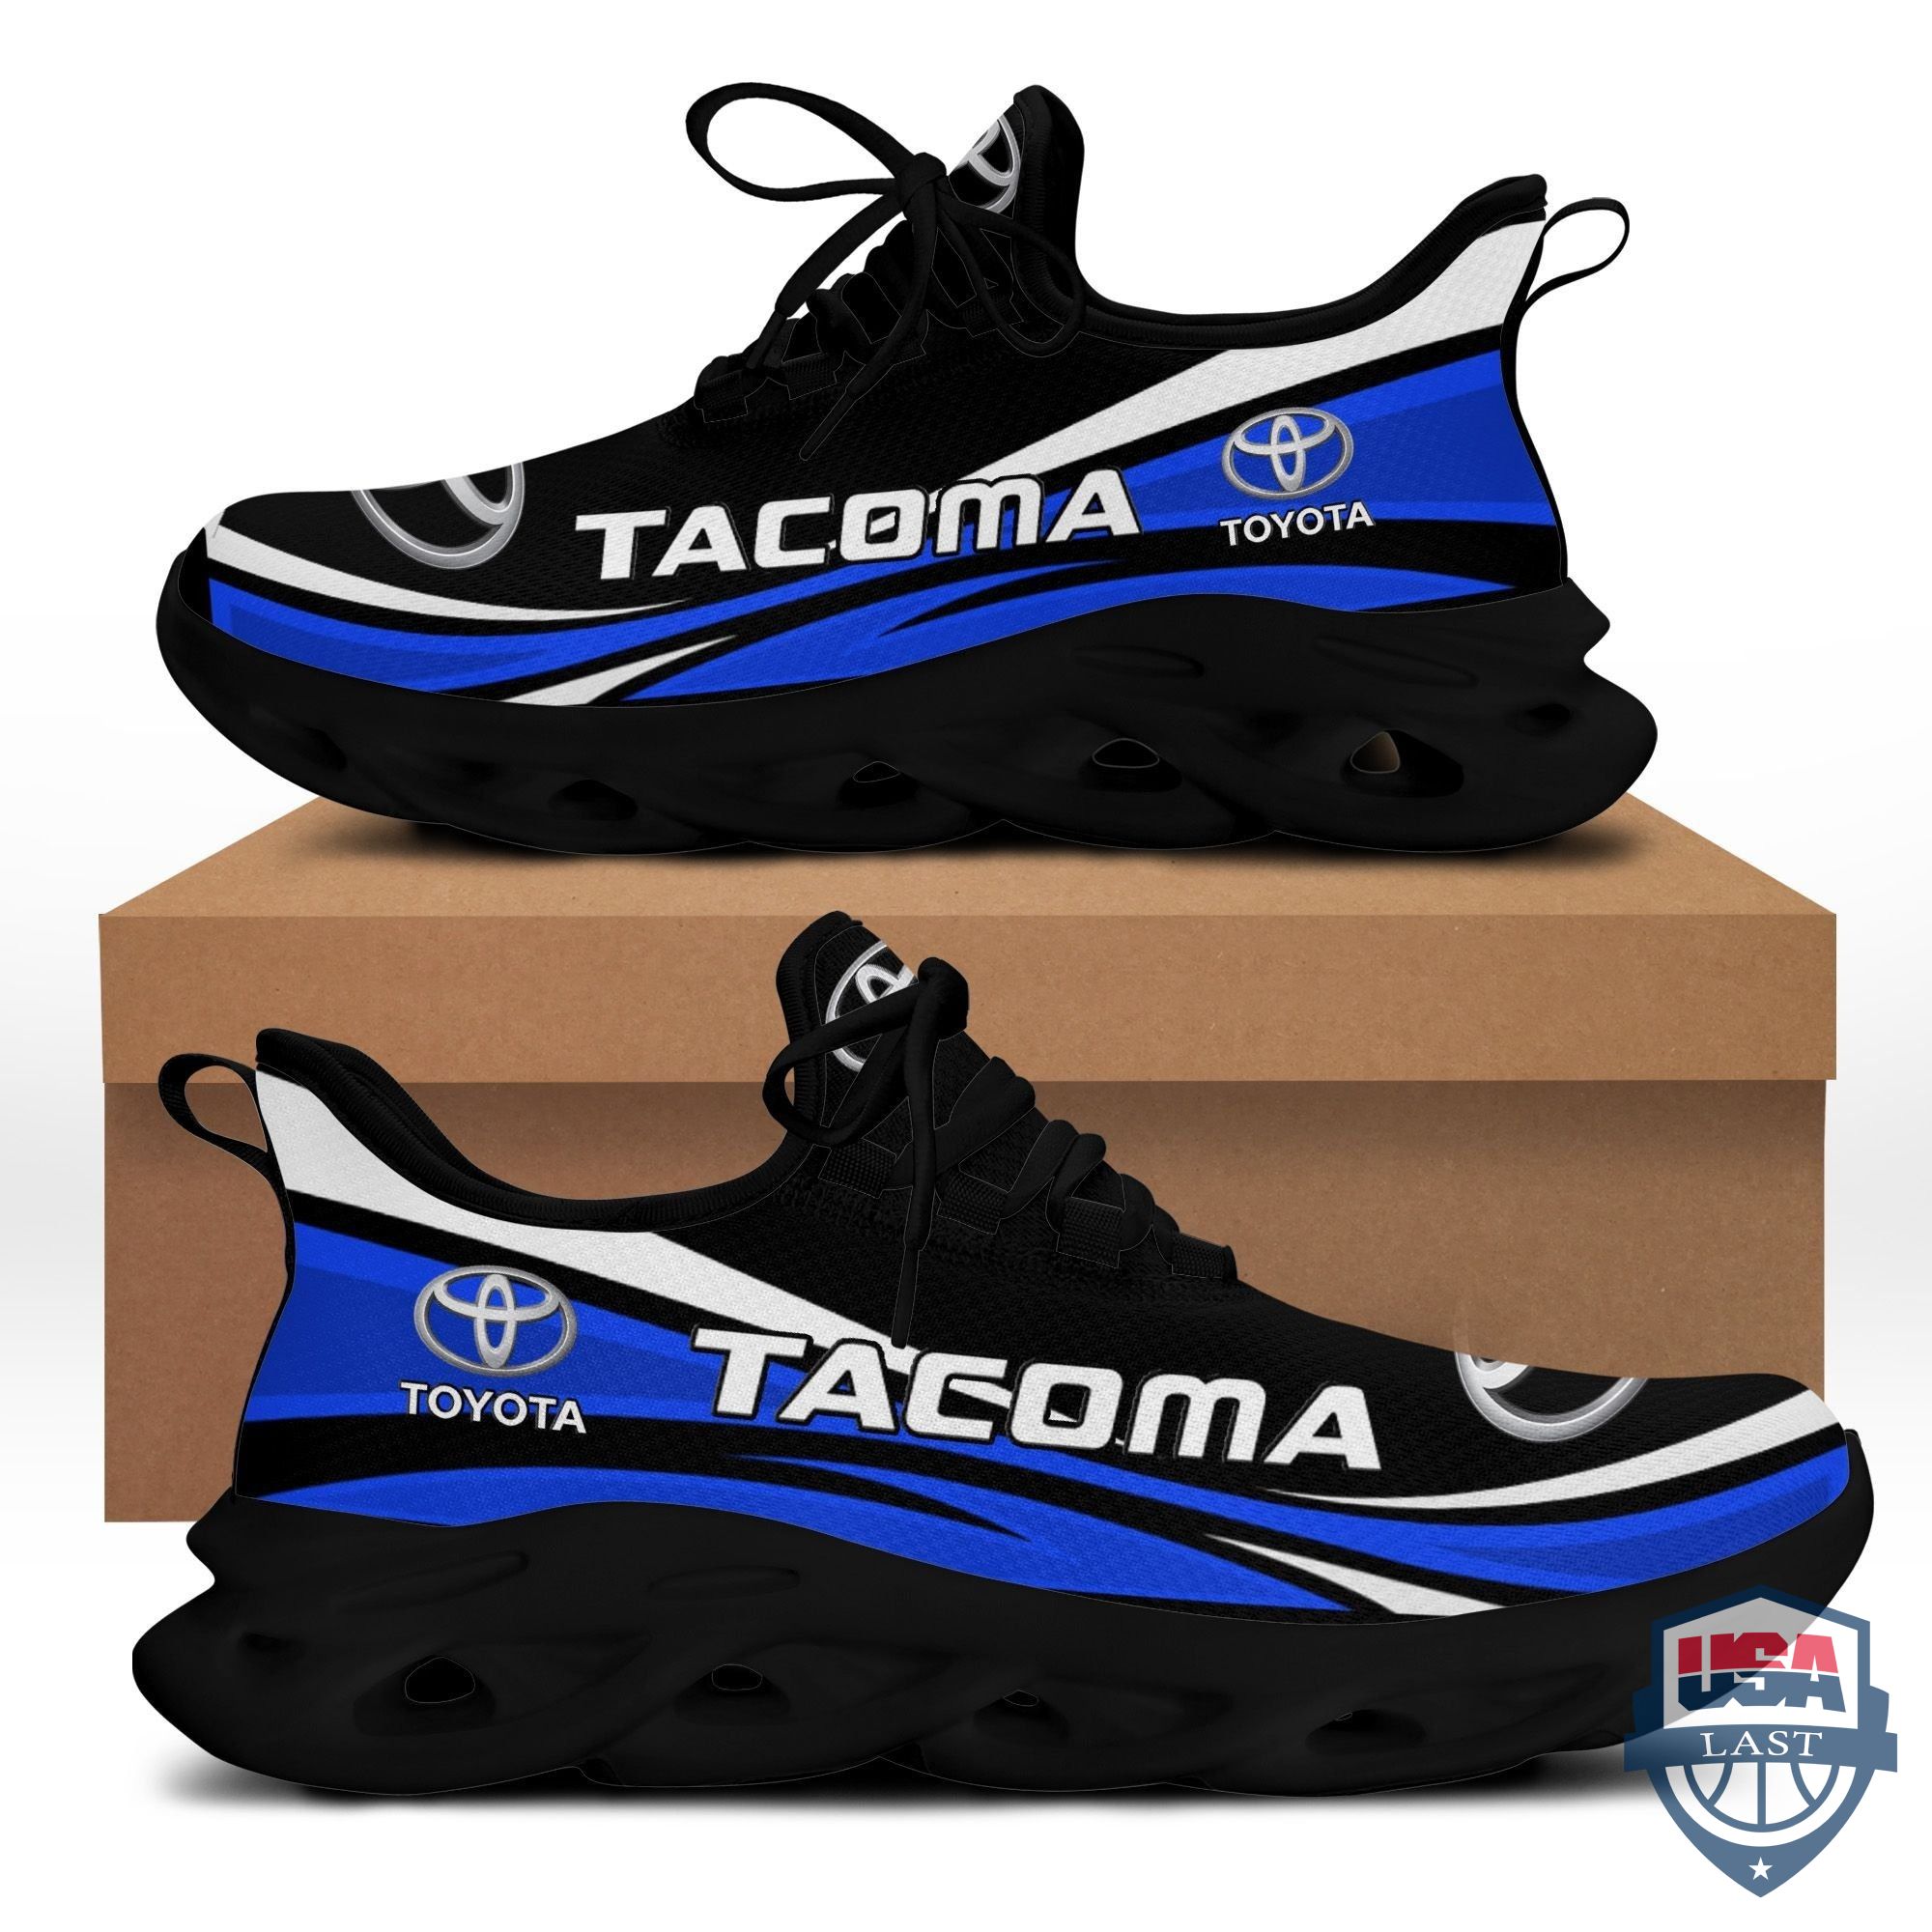 Toyota Tacoma Max Soul Sneaker Blue Version